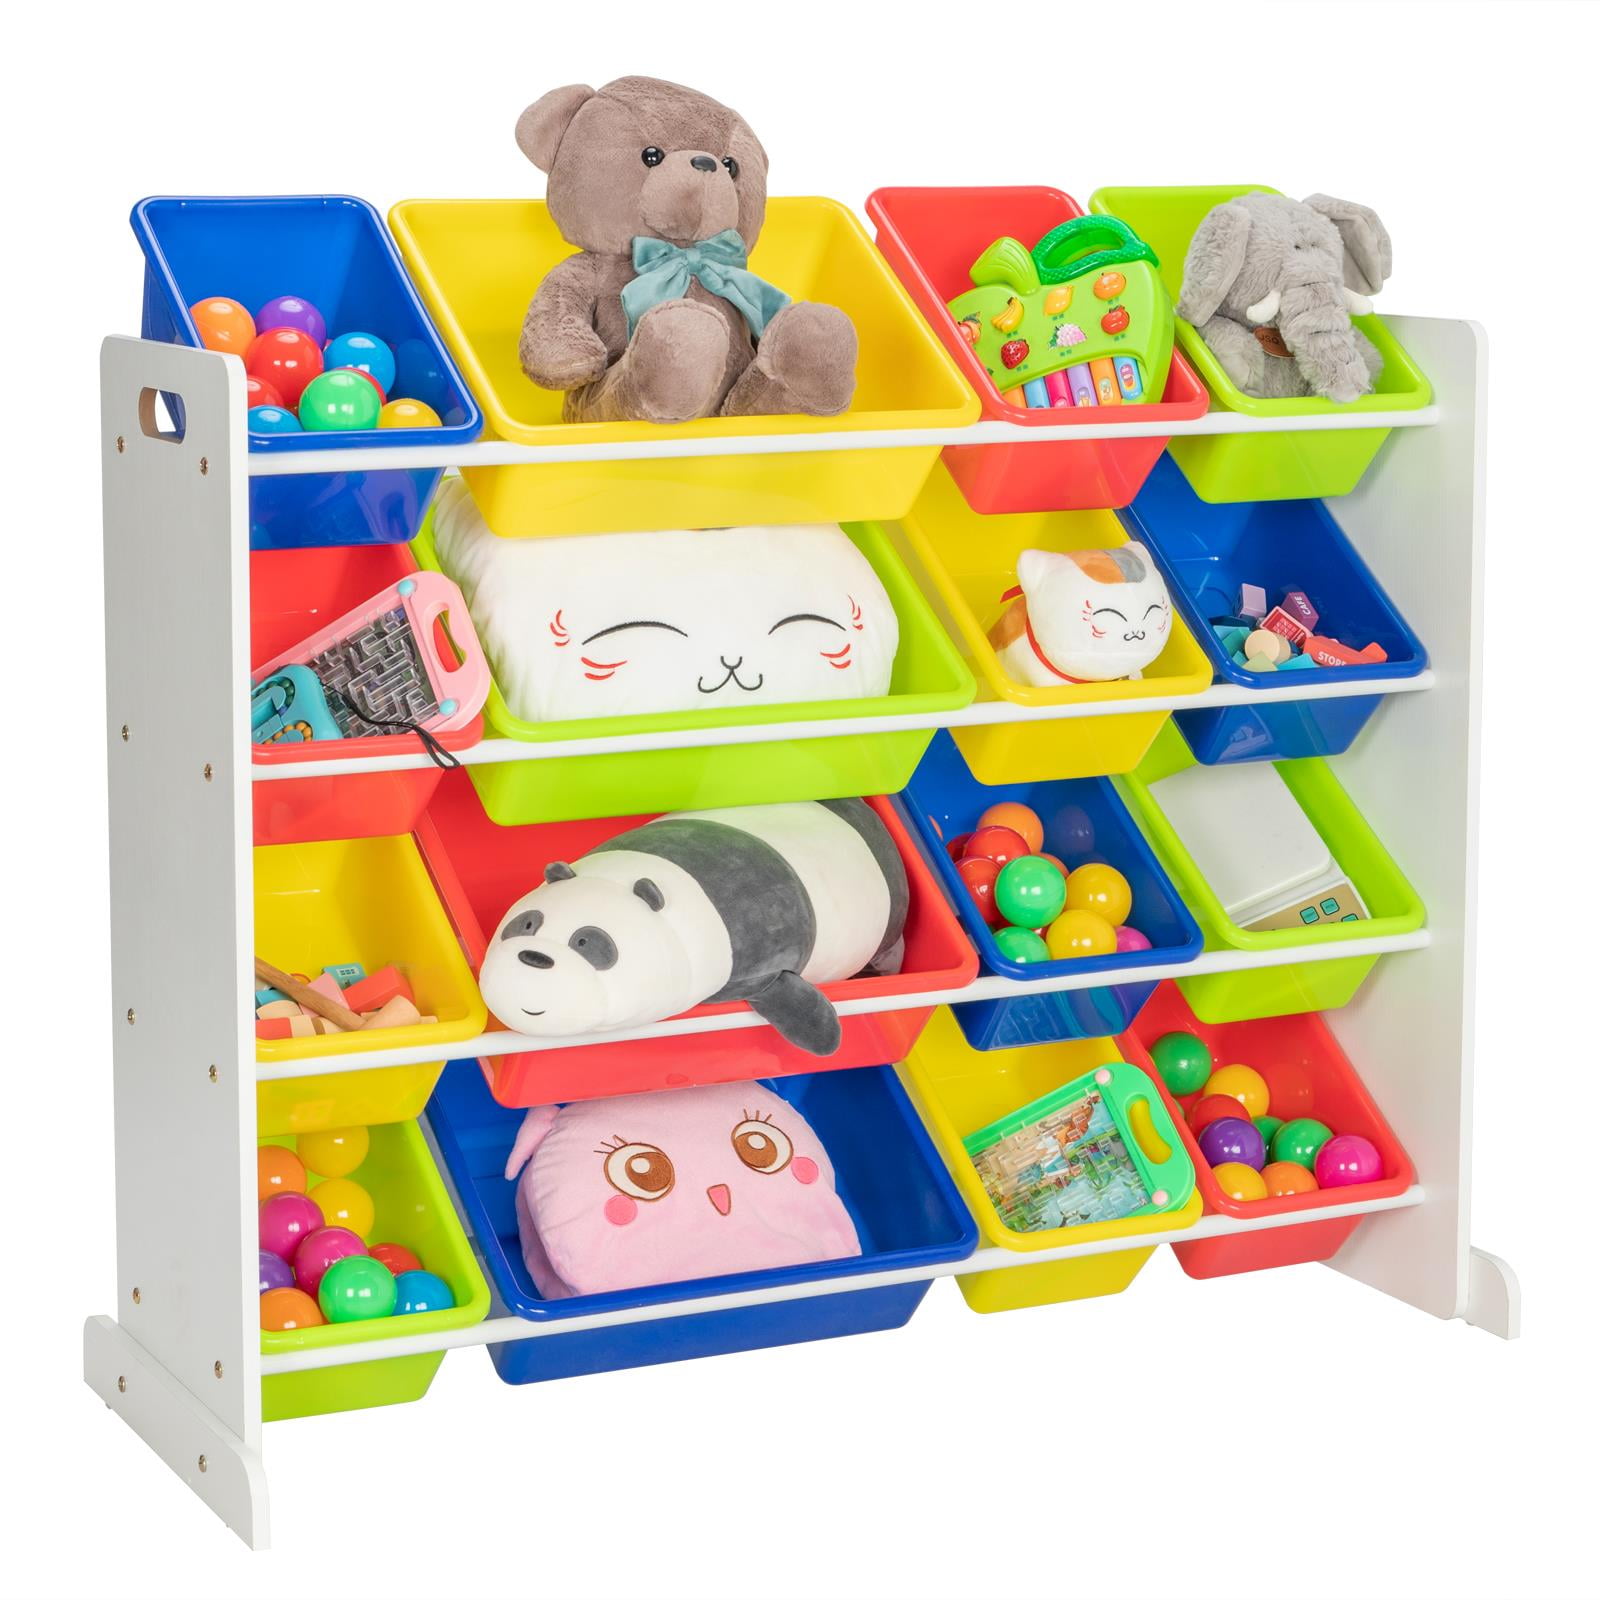 Totes Tidy Toy Organizer B Kids Furniture Set Storage spaces by Battat 